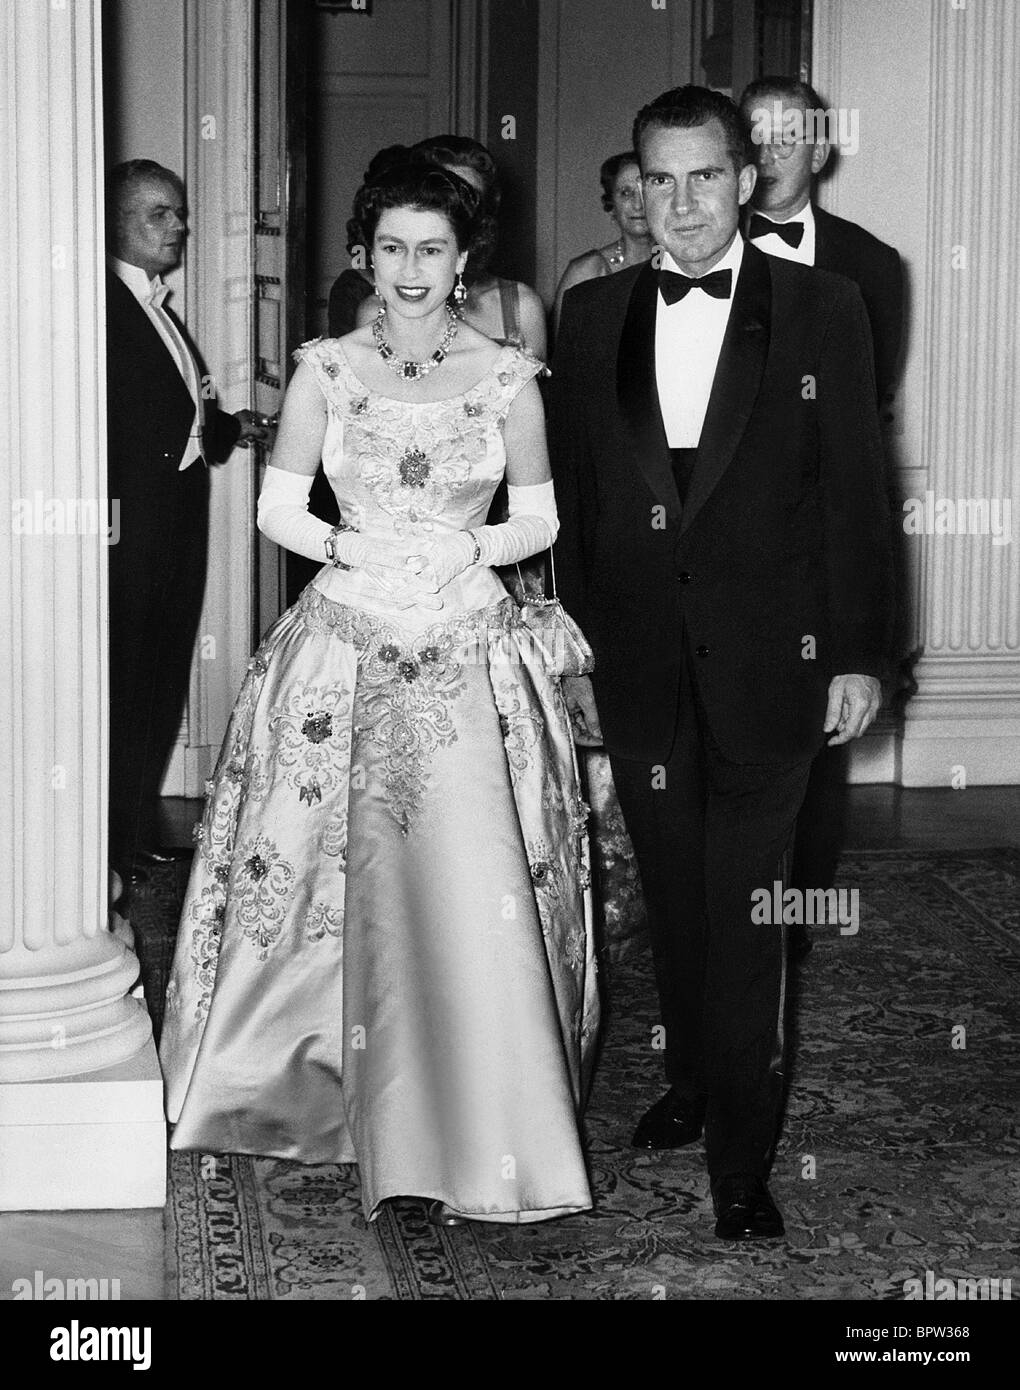 Königin ELIZABETH II & RICHARD NIXON Königin von ENGLAND 10. Juni 1958 Stockfoto